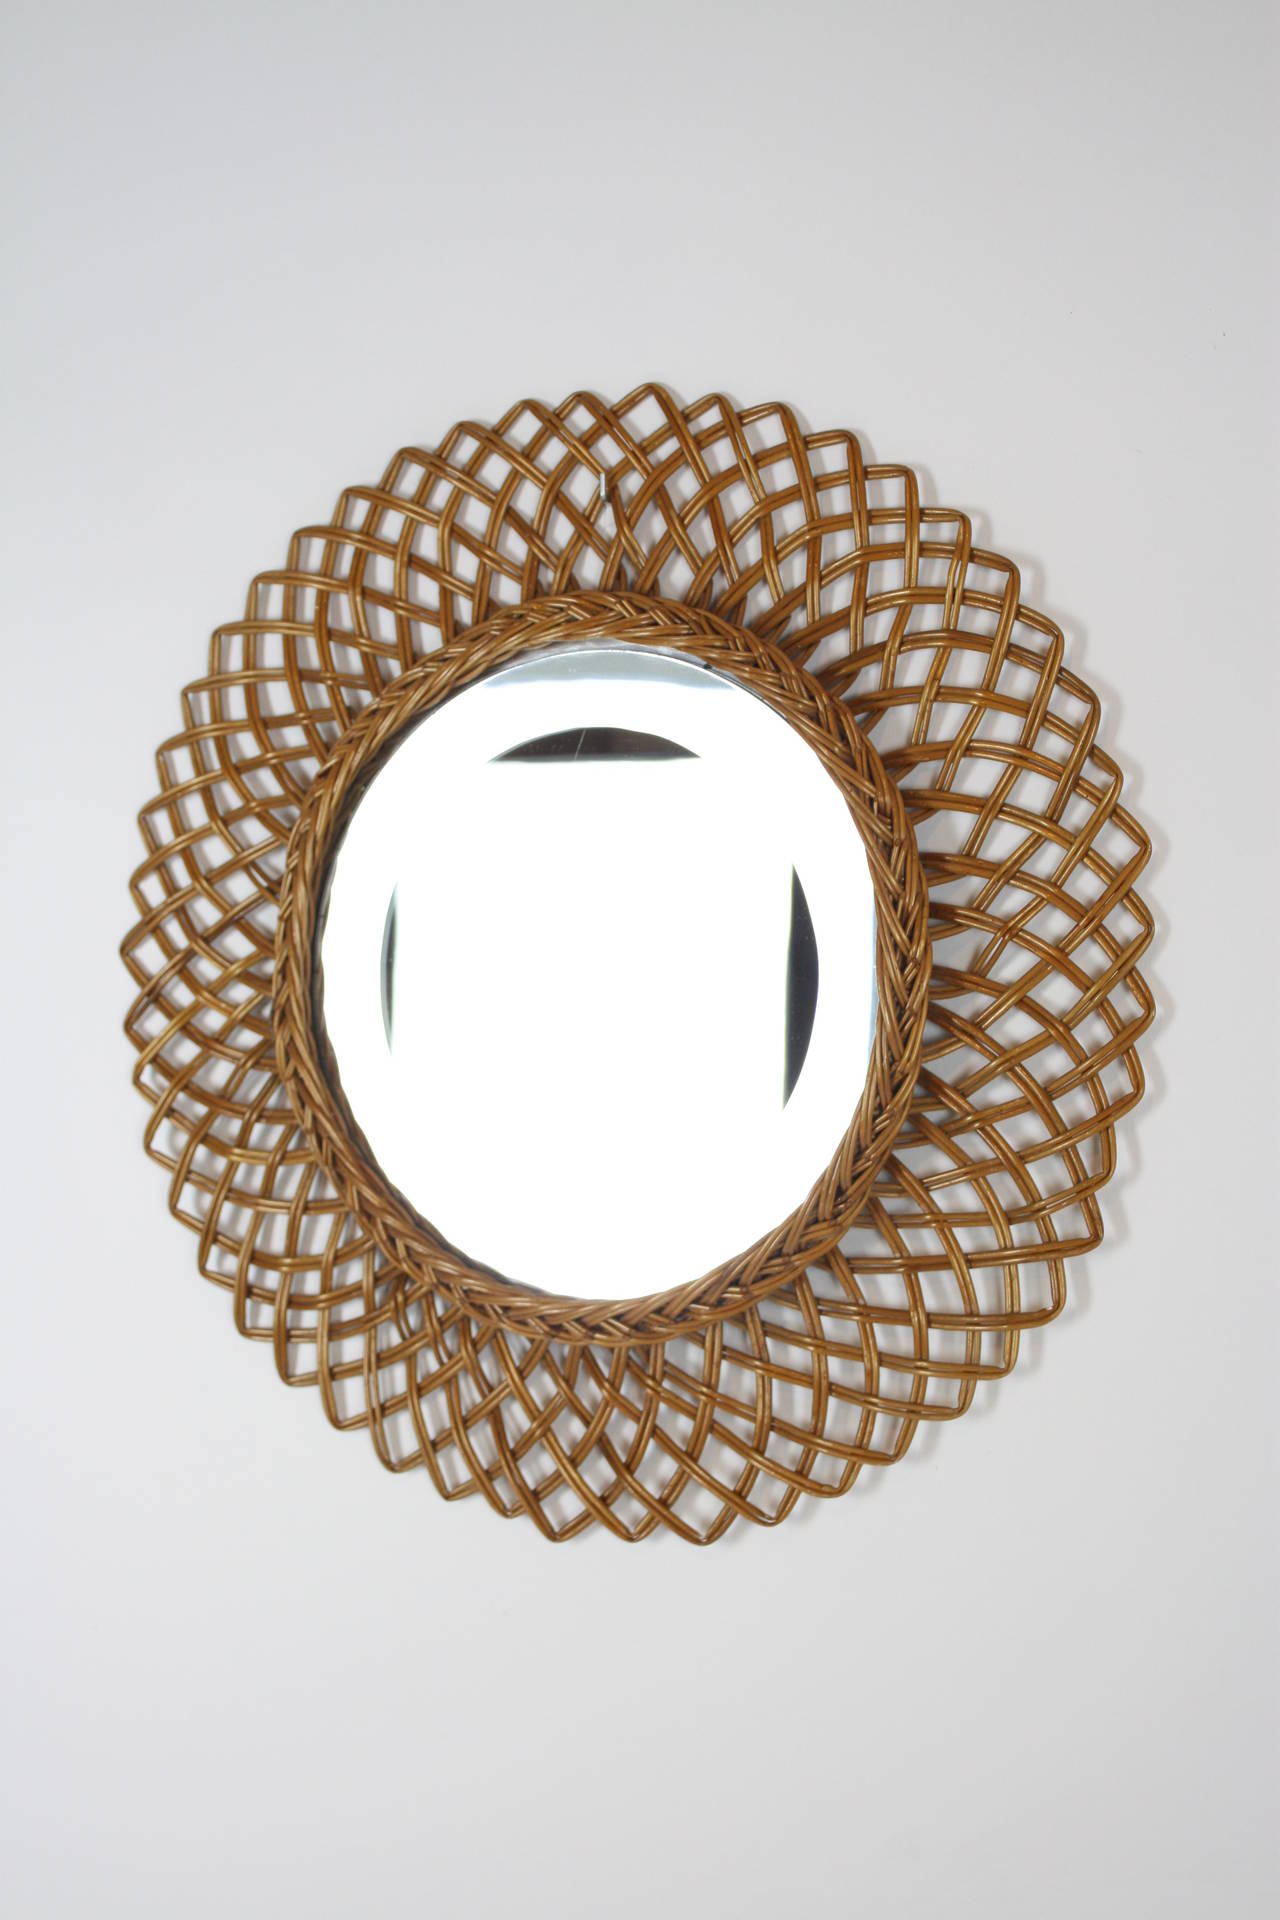 Hand-Crafted Spanish Rattan Midcentury Circular Mirror